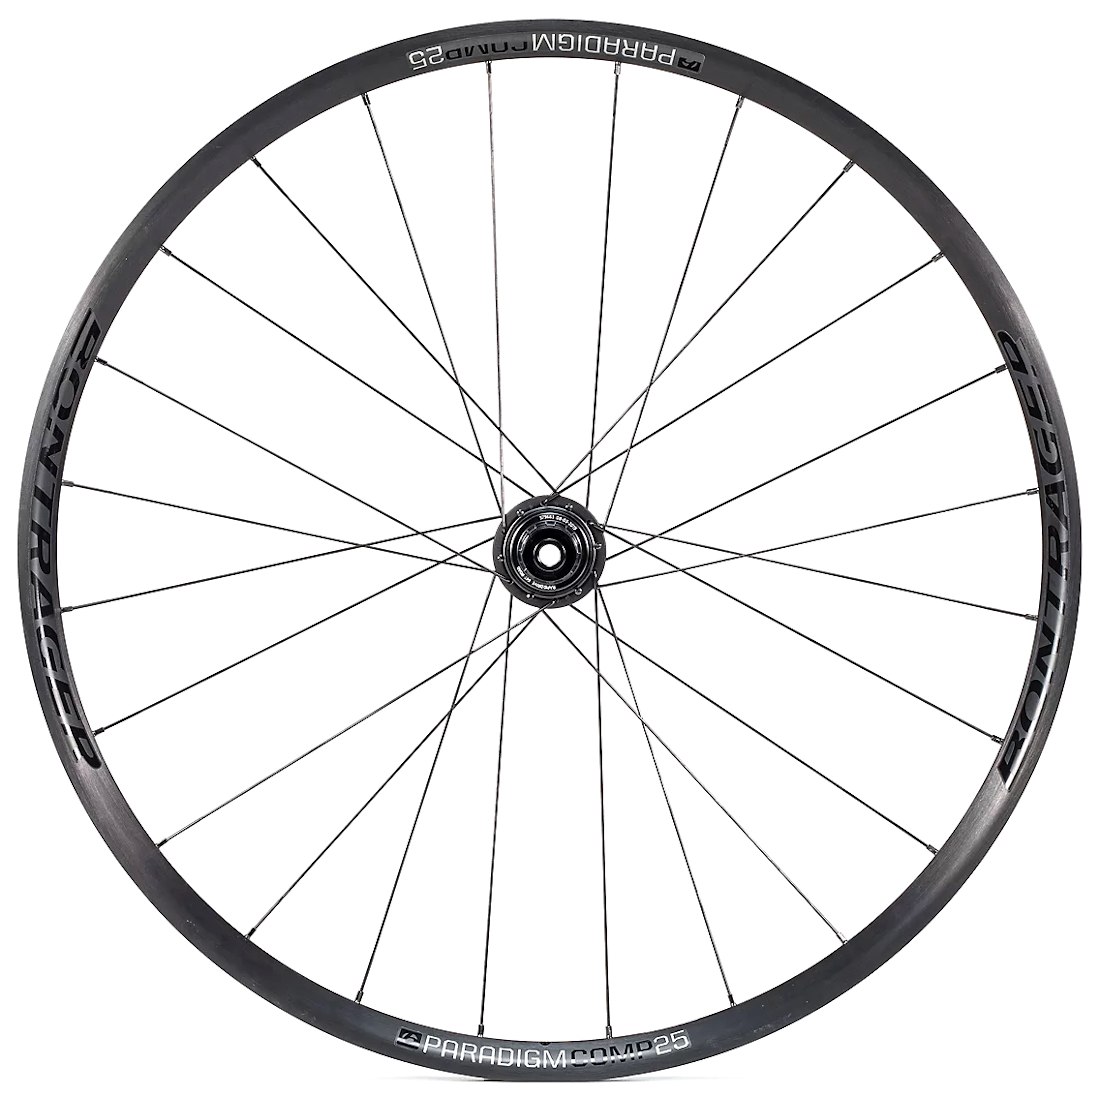 Productfoto van Bontrager Paradigm Comp 25 TLR Disc Road Rear Wheel - Clincher - Centerlock - 12x142mm